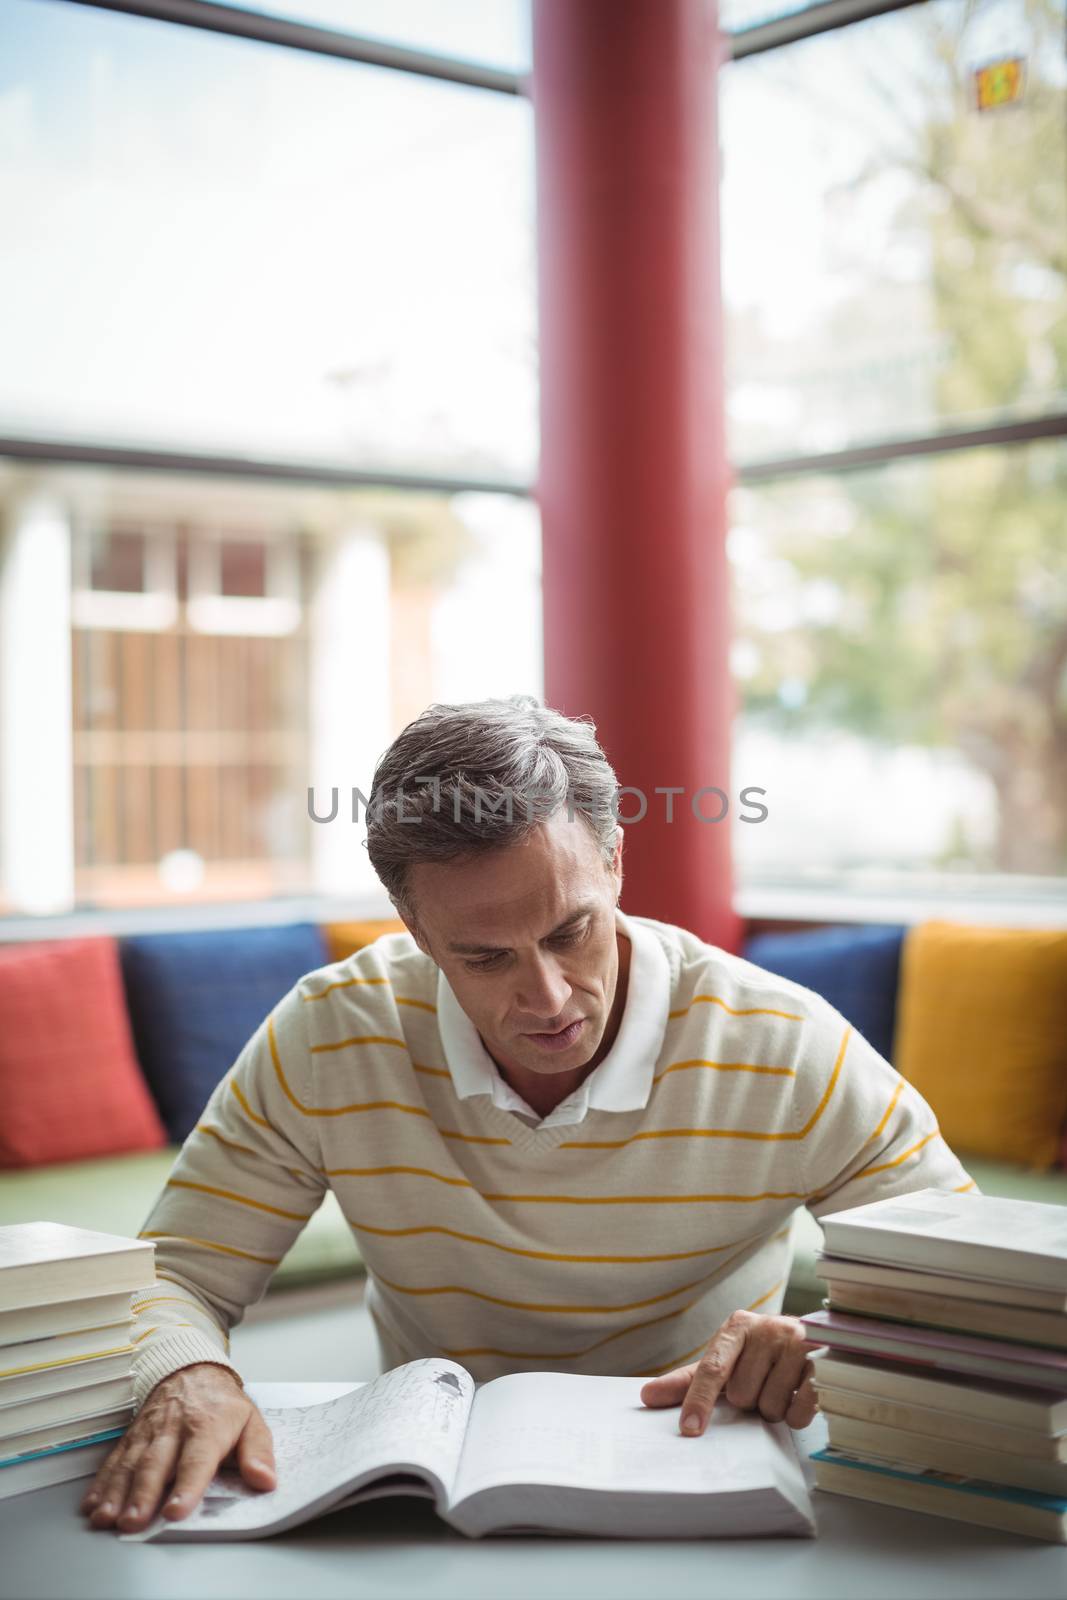 Attentive school teacher reading book in library by Wavebreakmedia